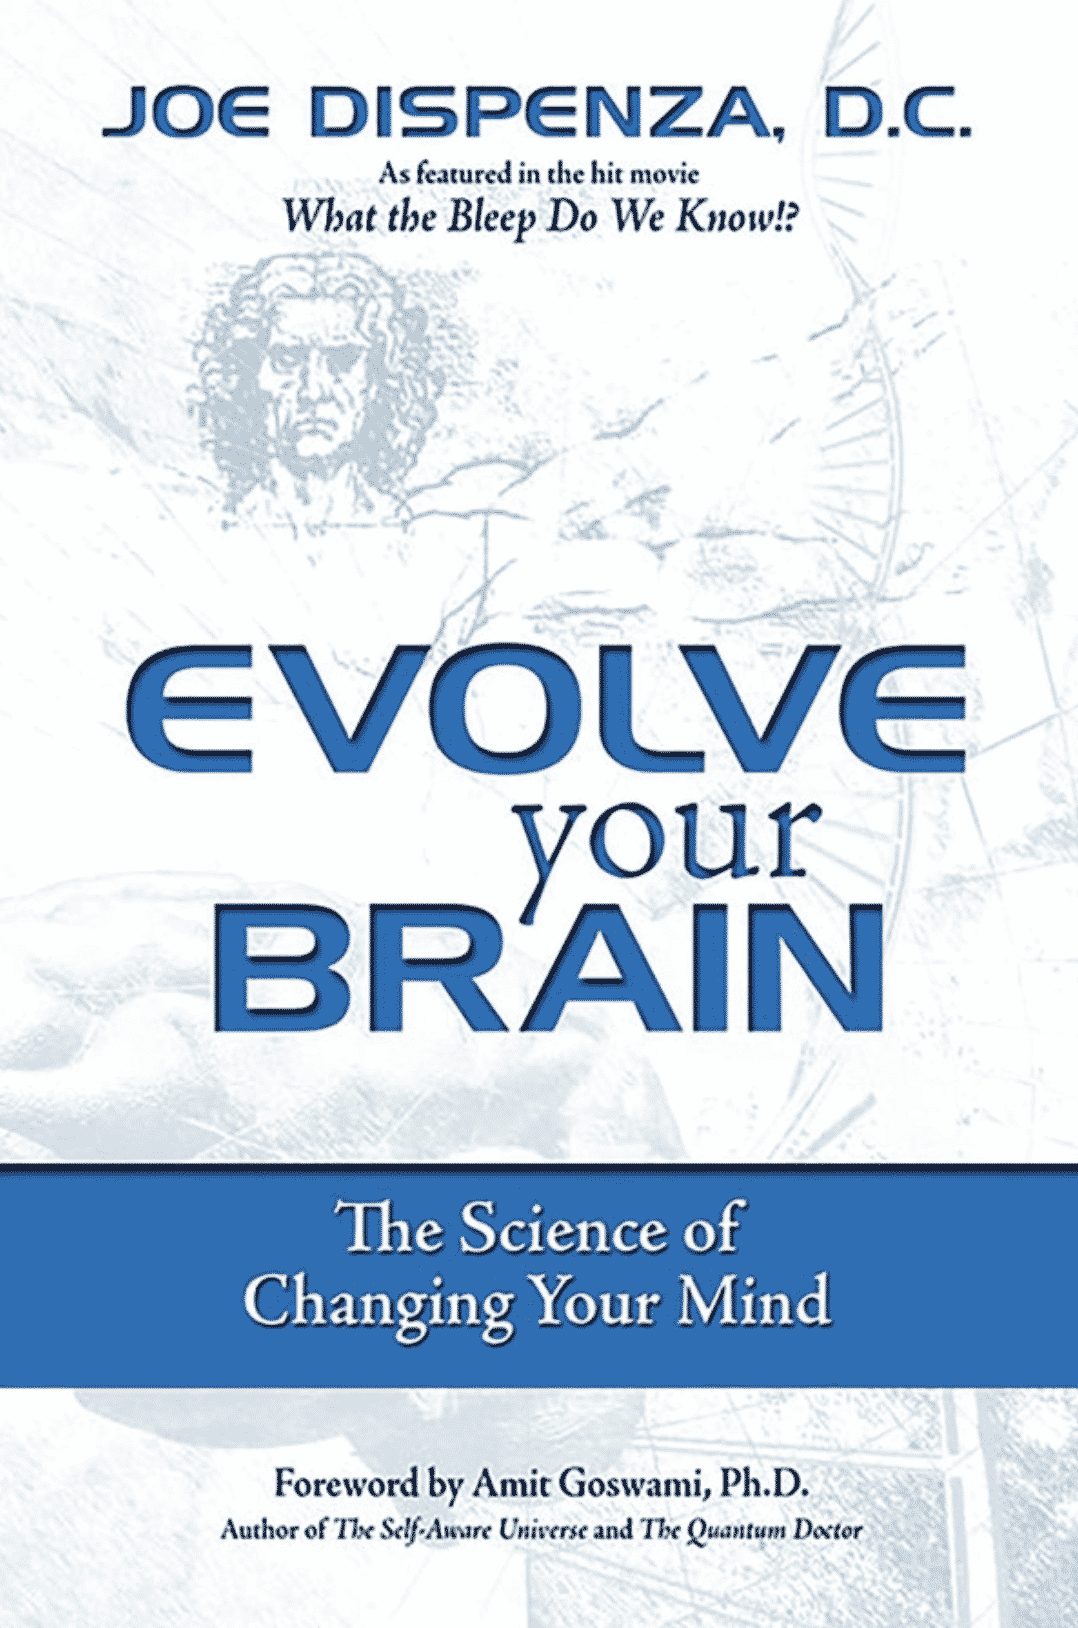 image of Joe Dispenza's book; Evolve your brain.